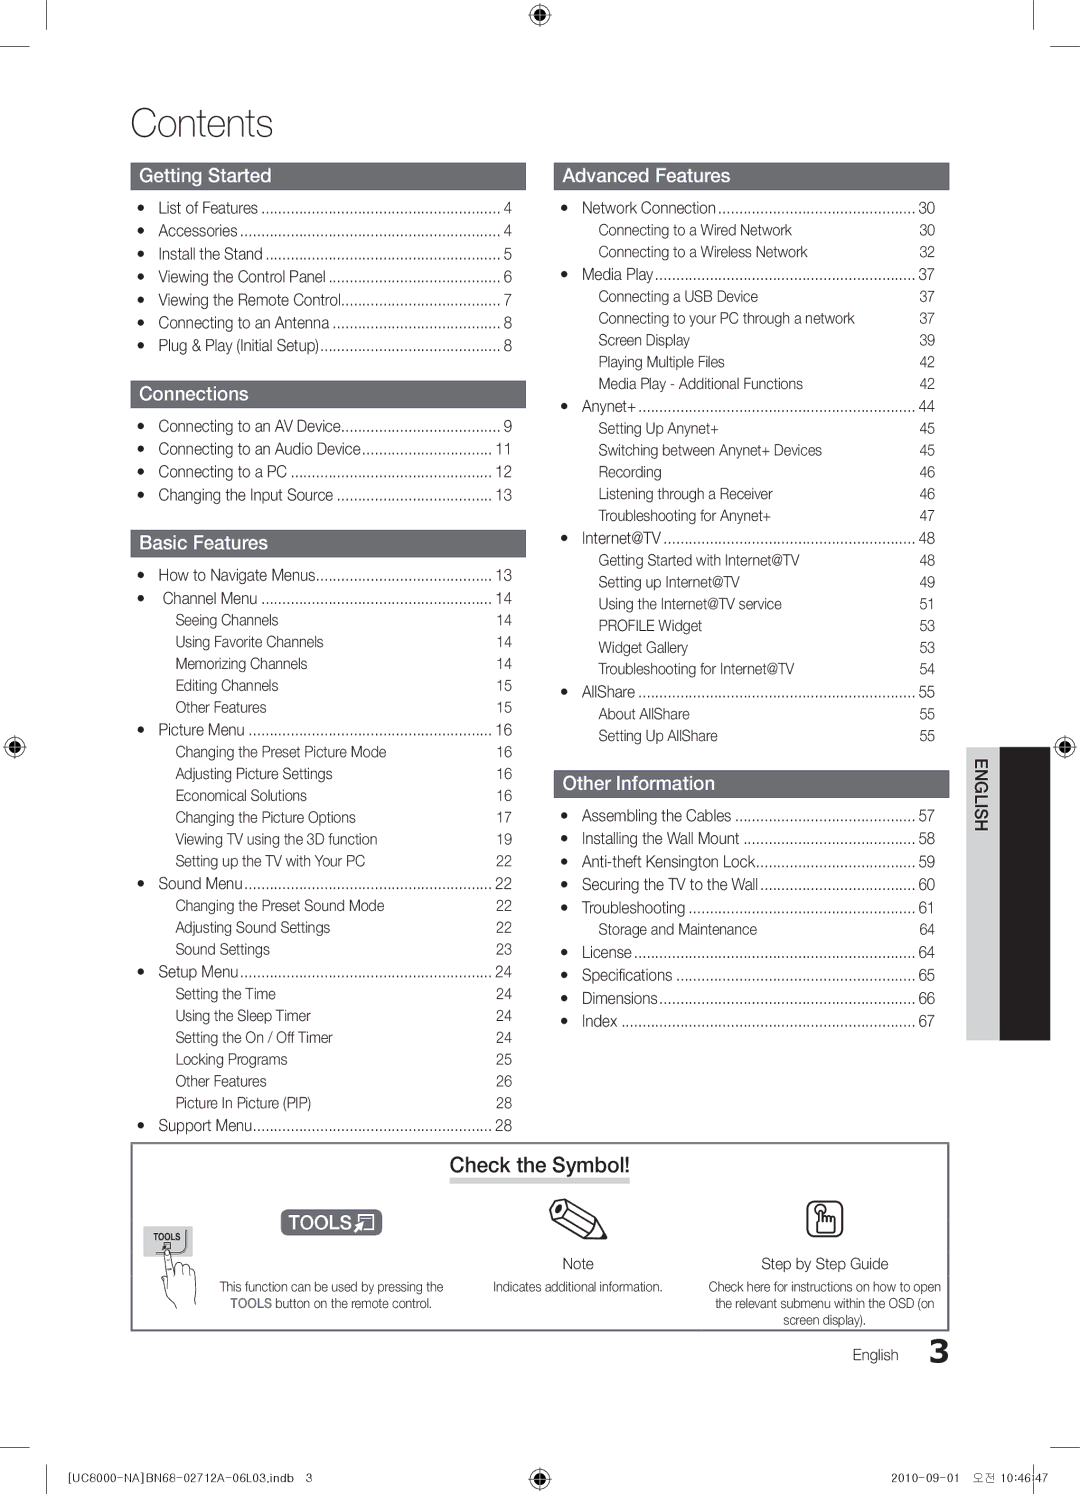 Samsung BN68-02712A-06 user manual Contents 